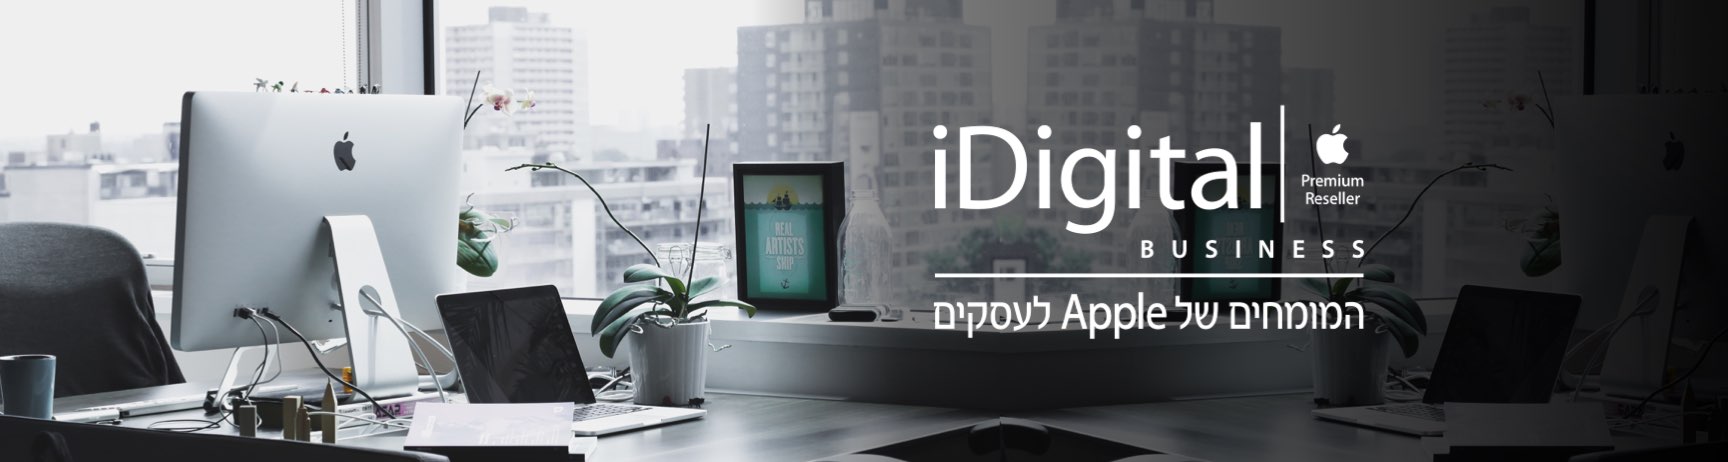 iDigital Business המומחים של Apple לעסקים